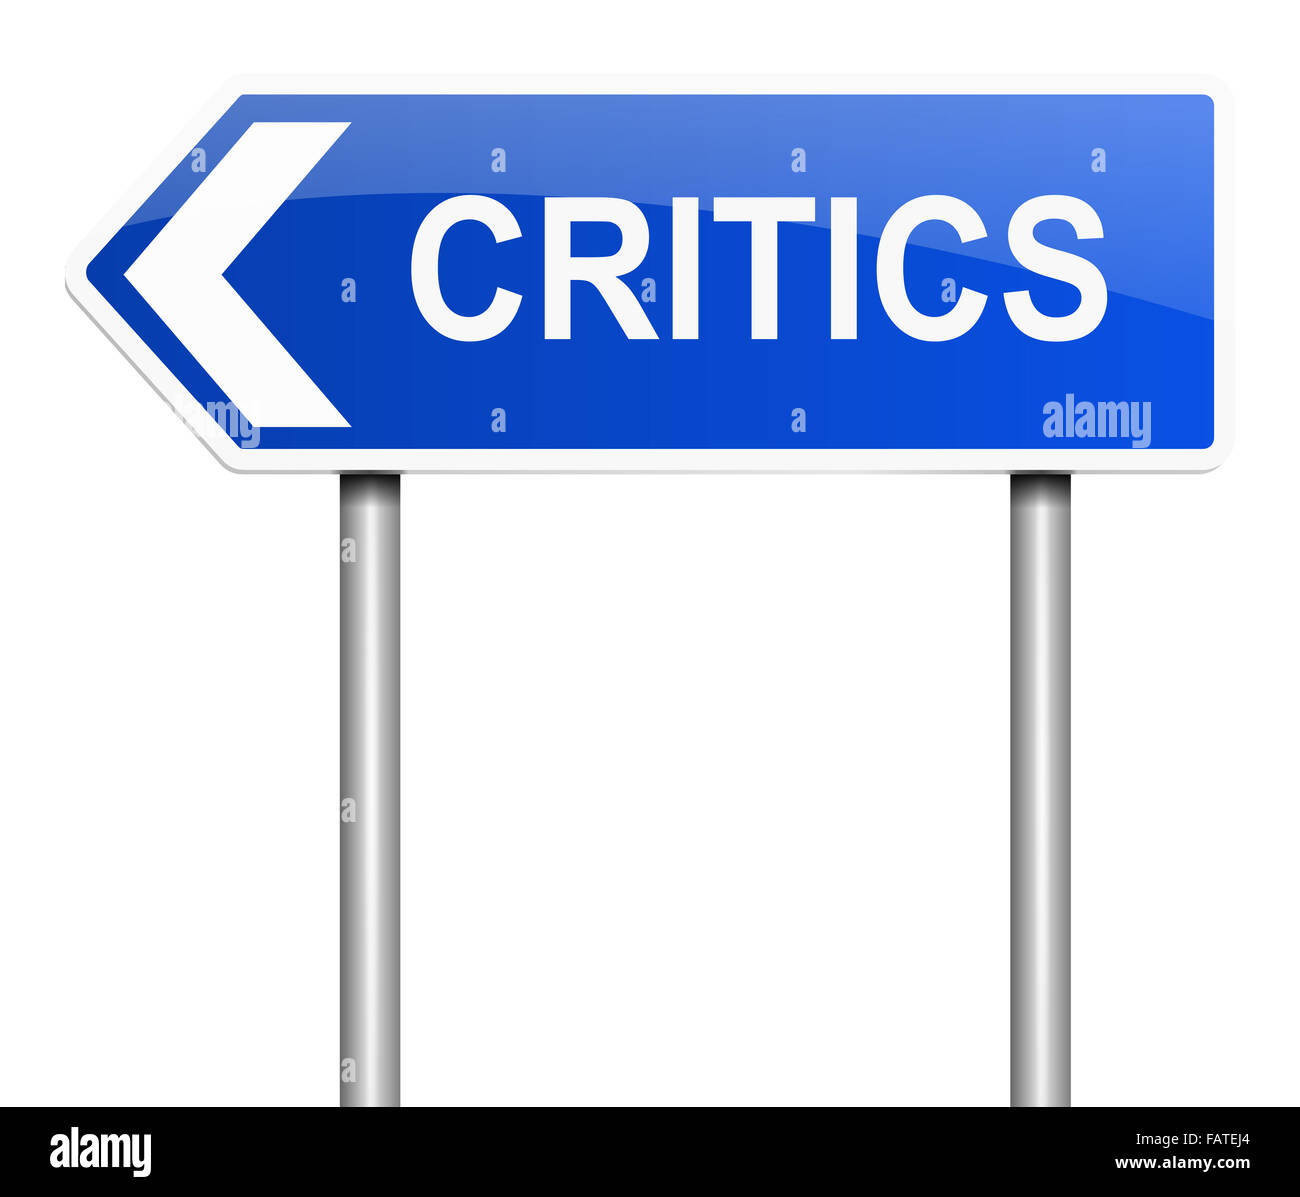 Critics concept. Stock Photo